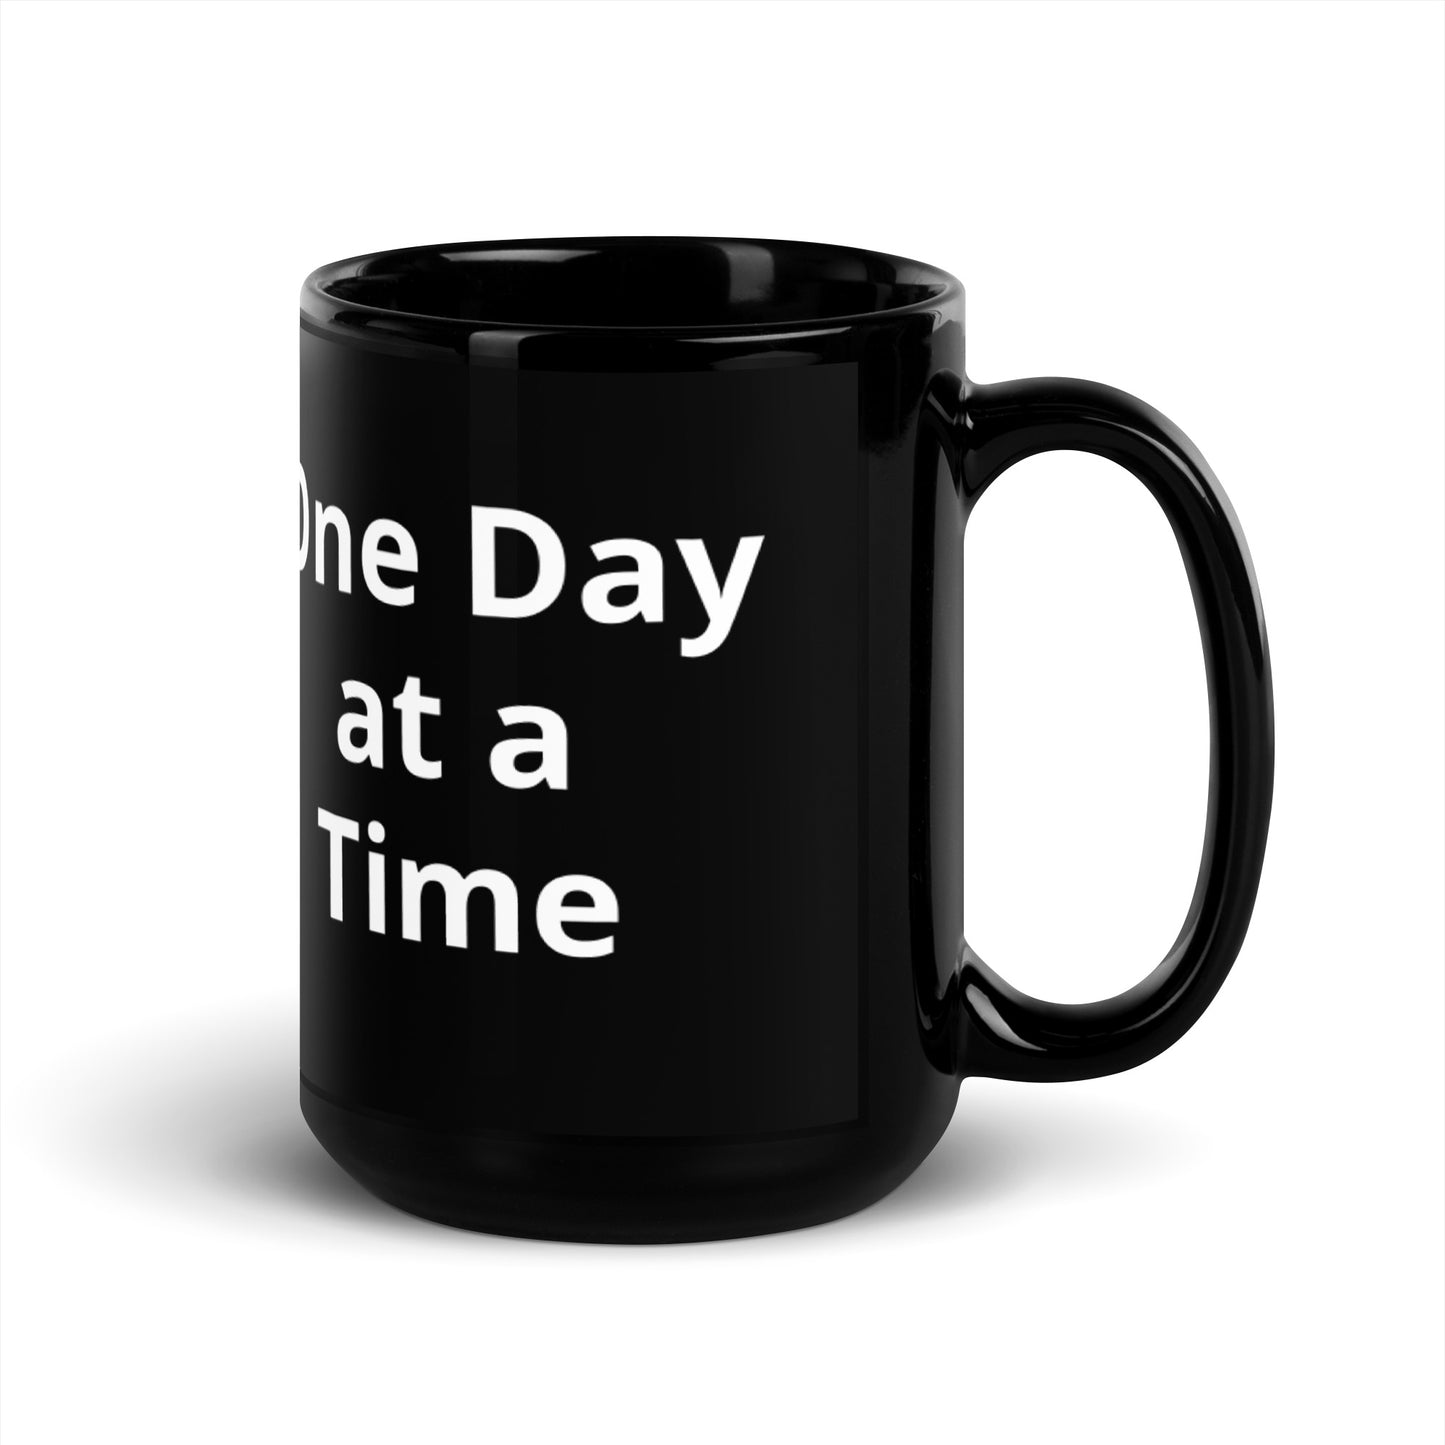 One Day Mug